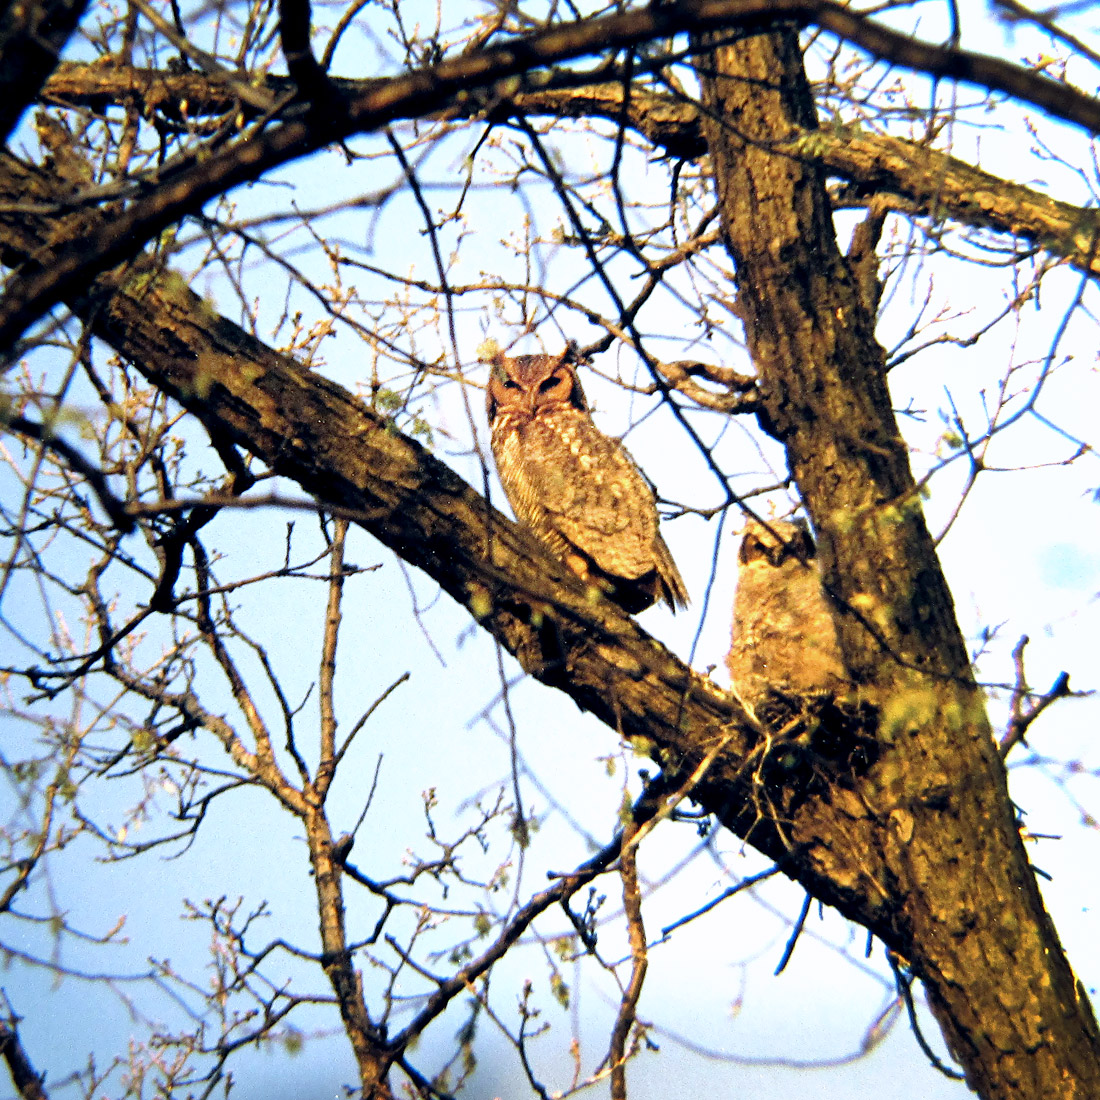 Owl - photo by Jim Steffen